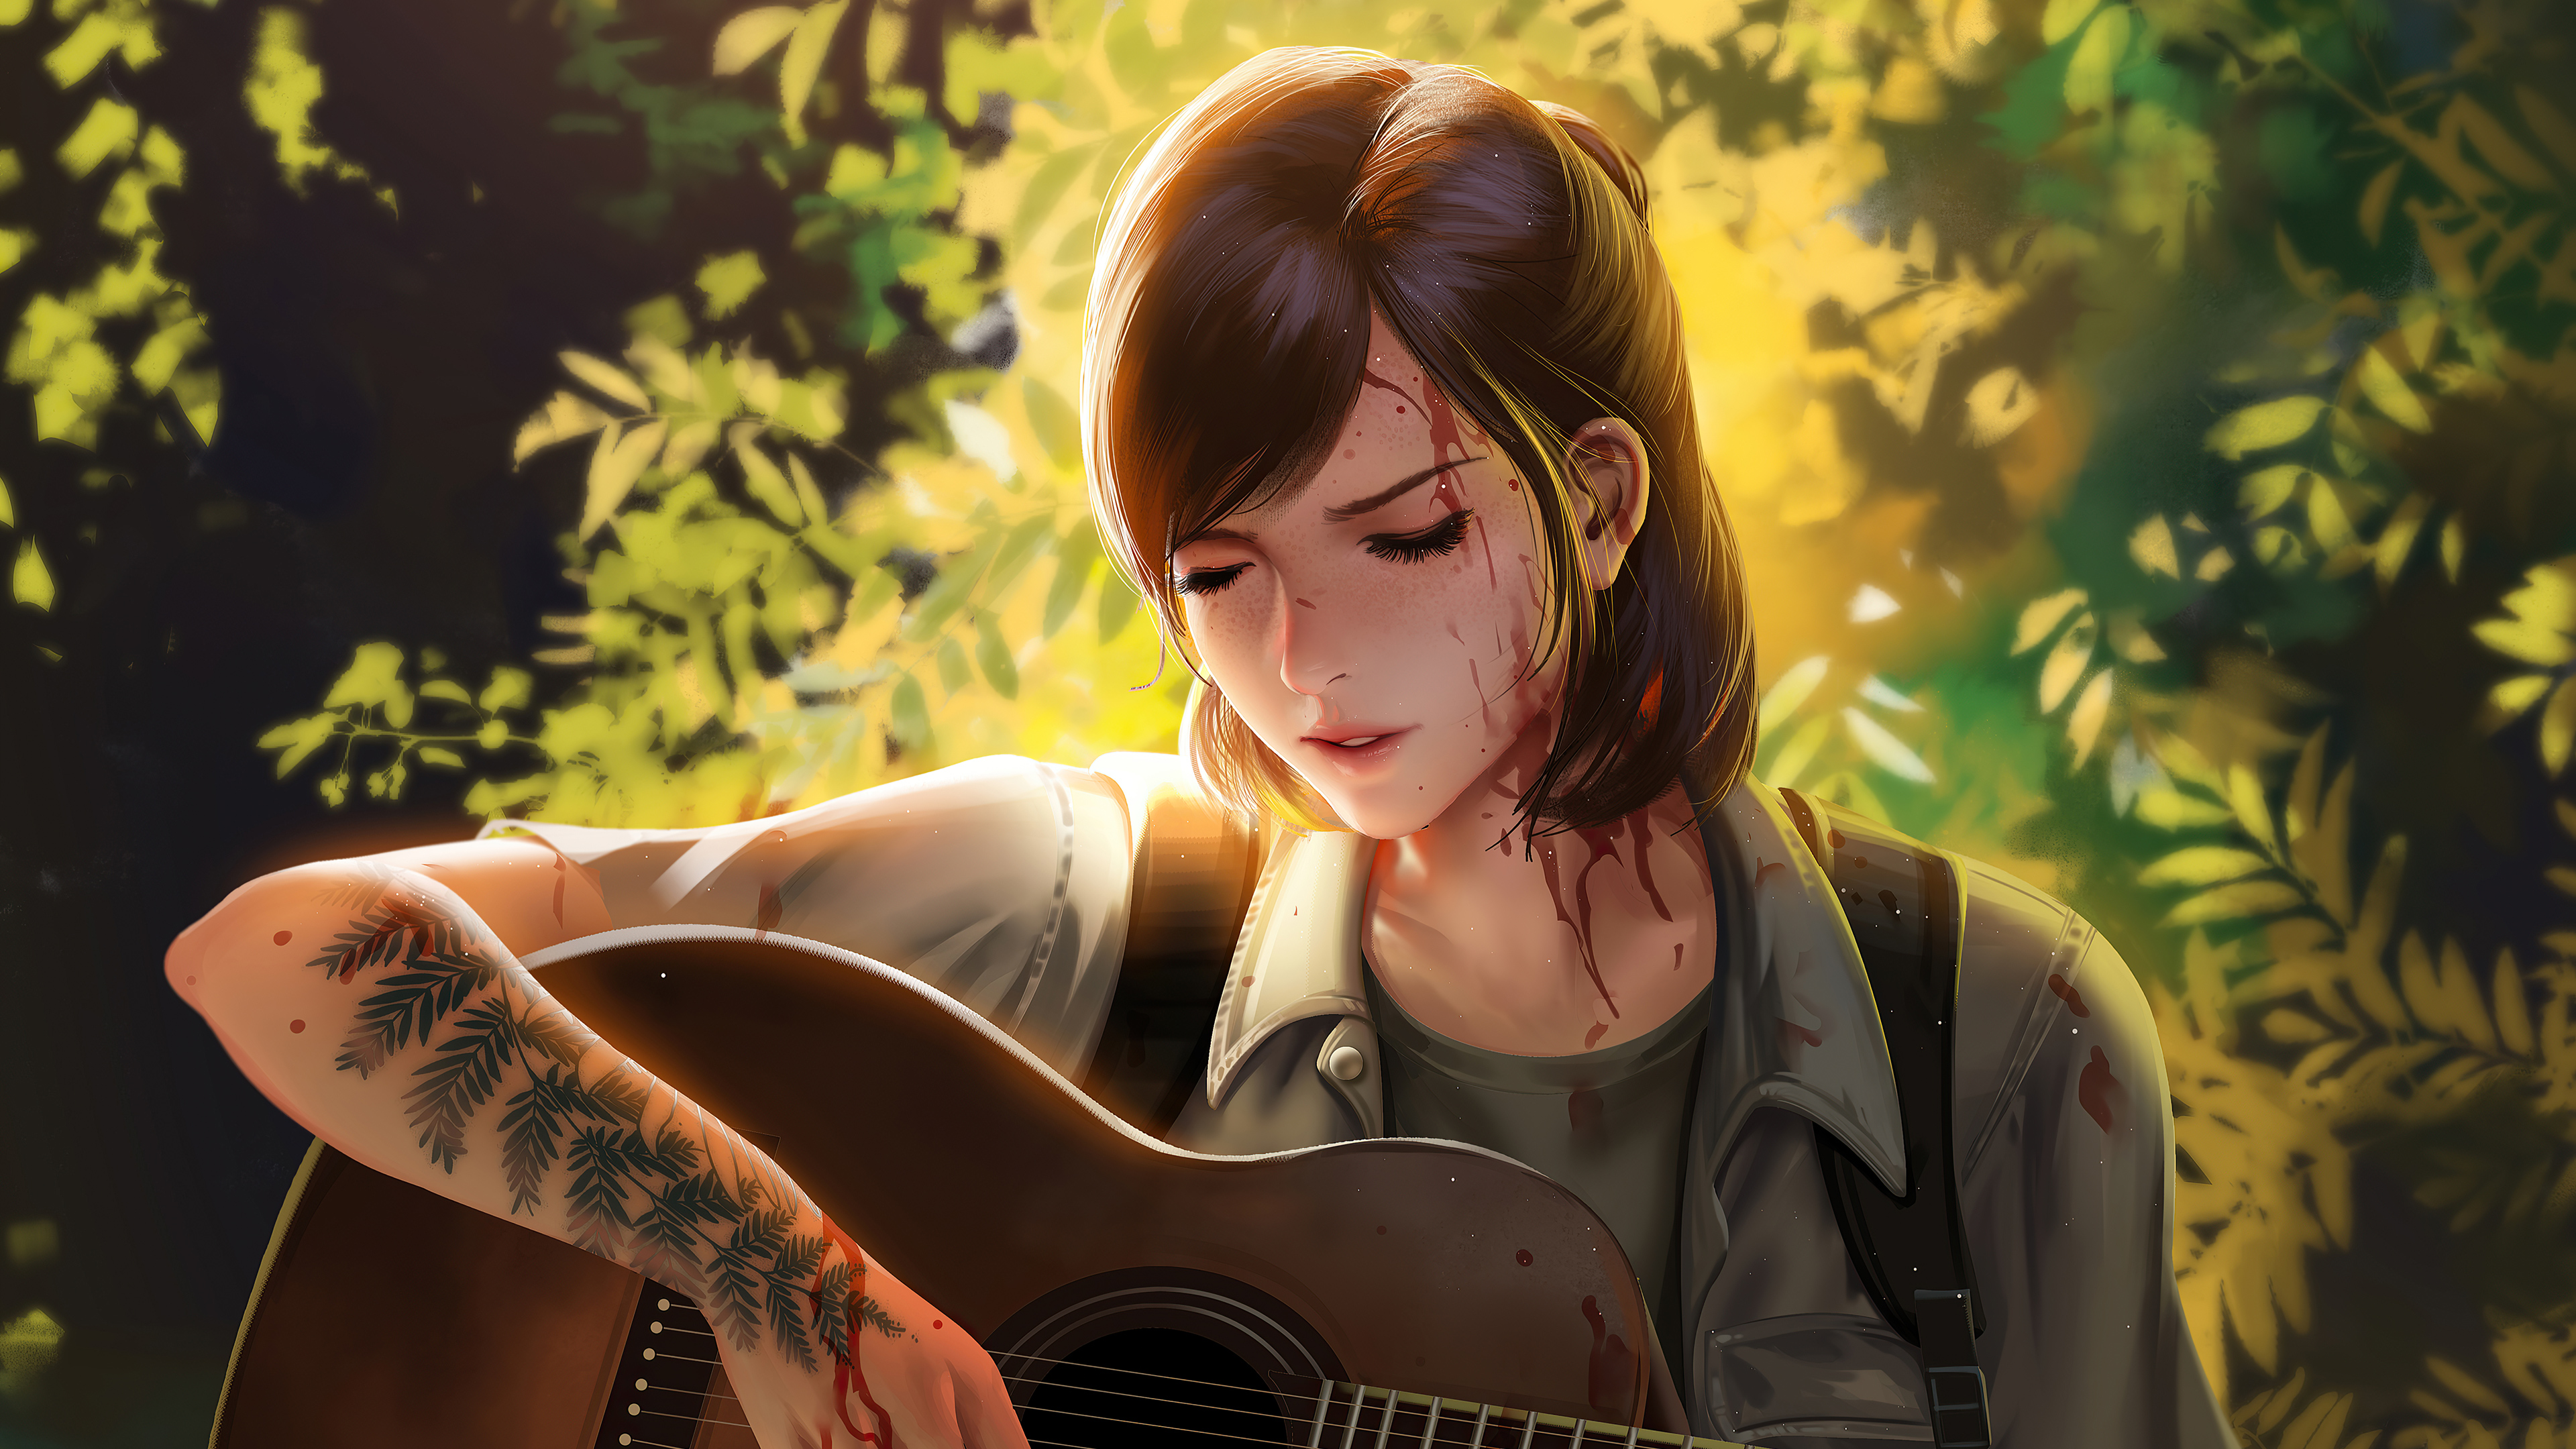 Artwork Ellie Williams The Last Of Us The Last Of Us 2 Digital Art Fan Art Digital Painting Guitar T 3840x2160